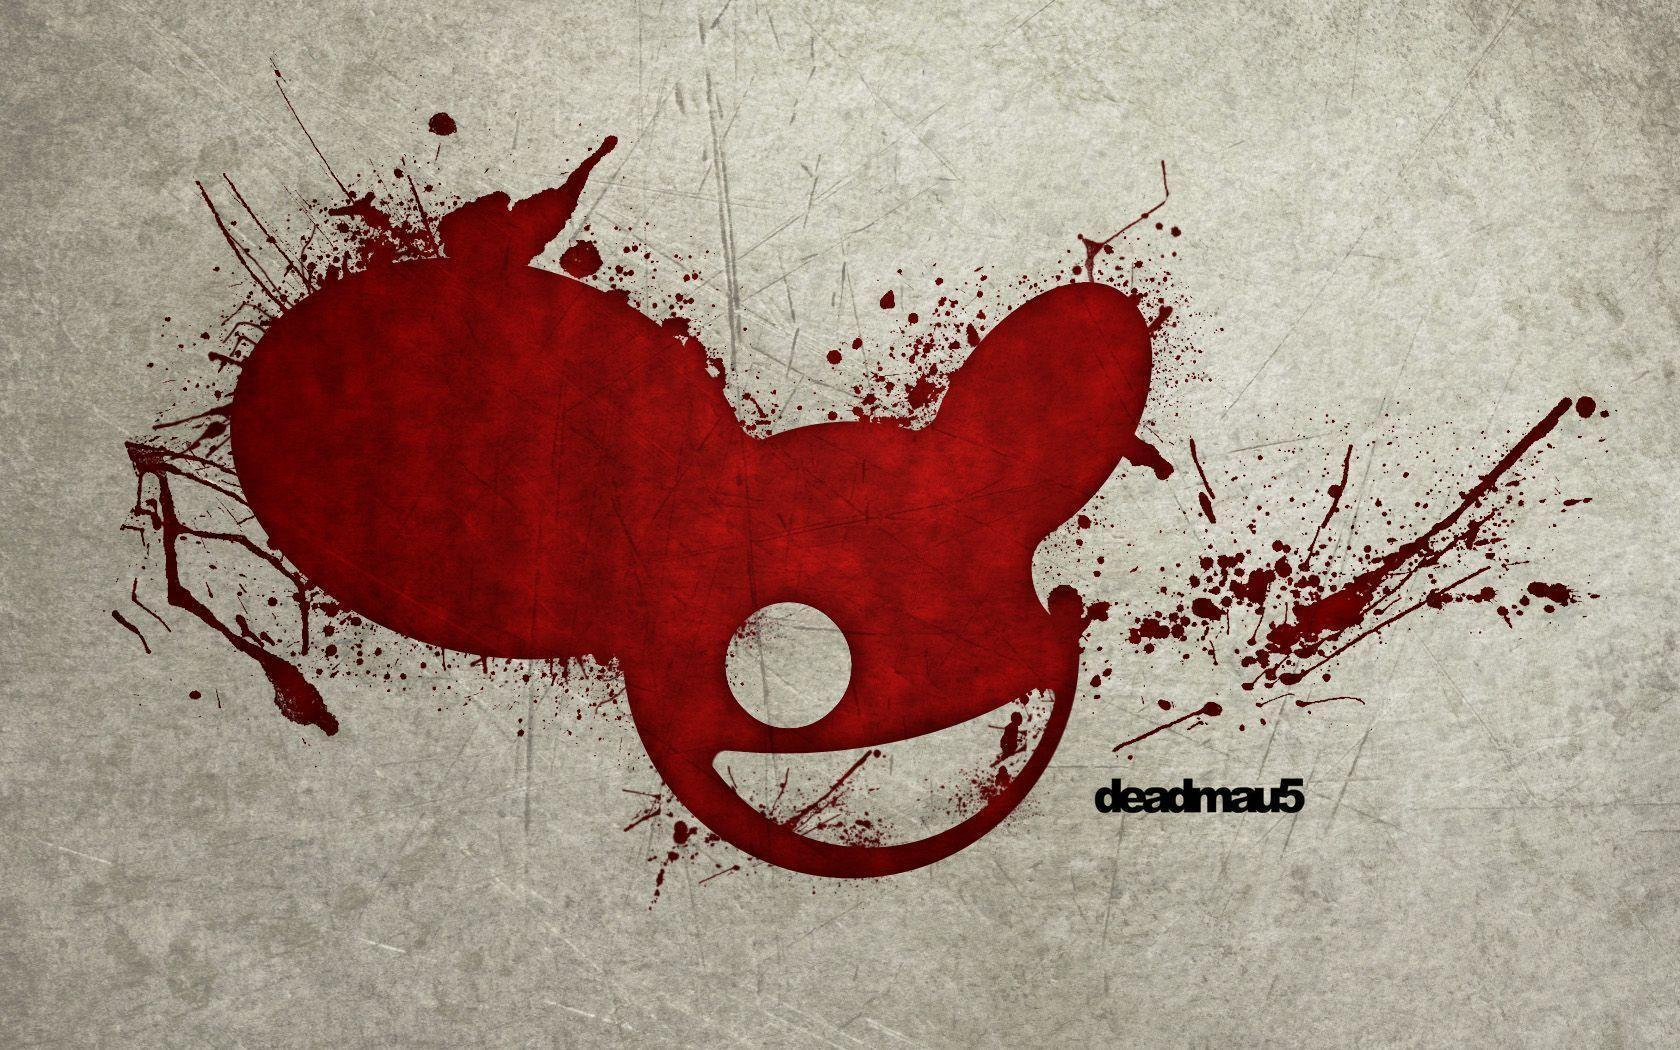 Deadmau5 Background